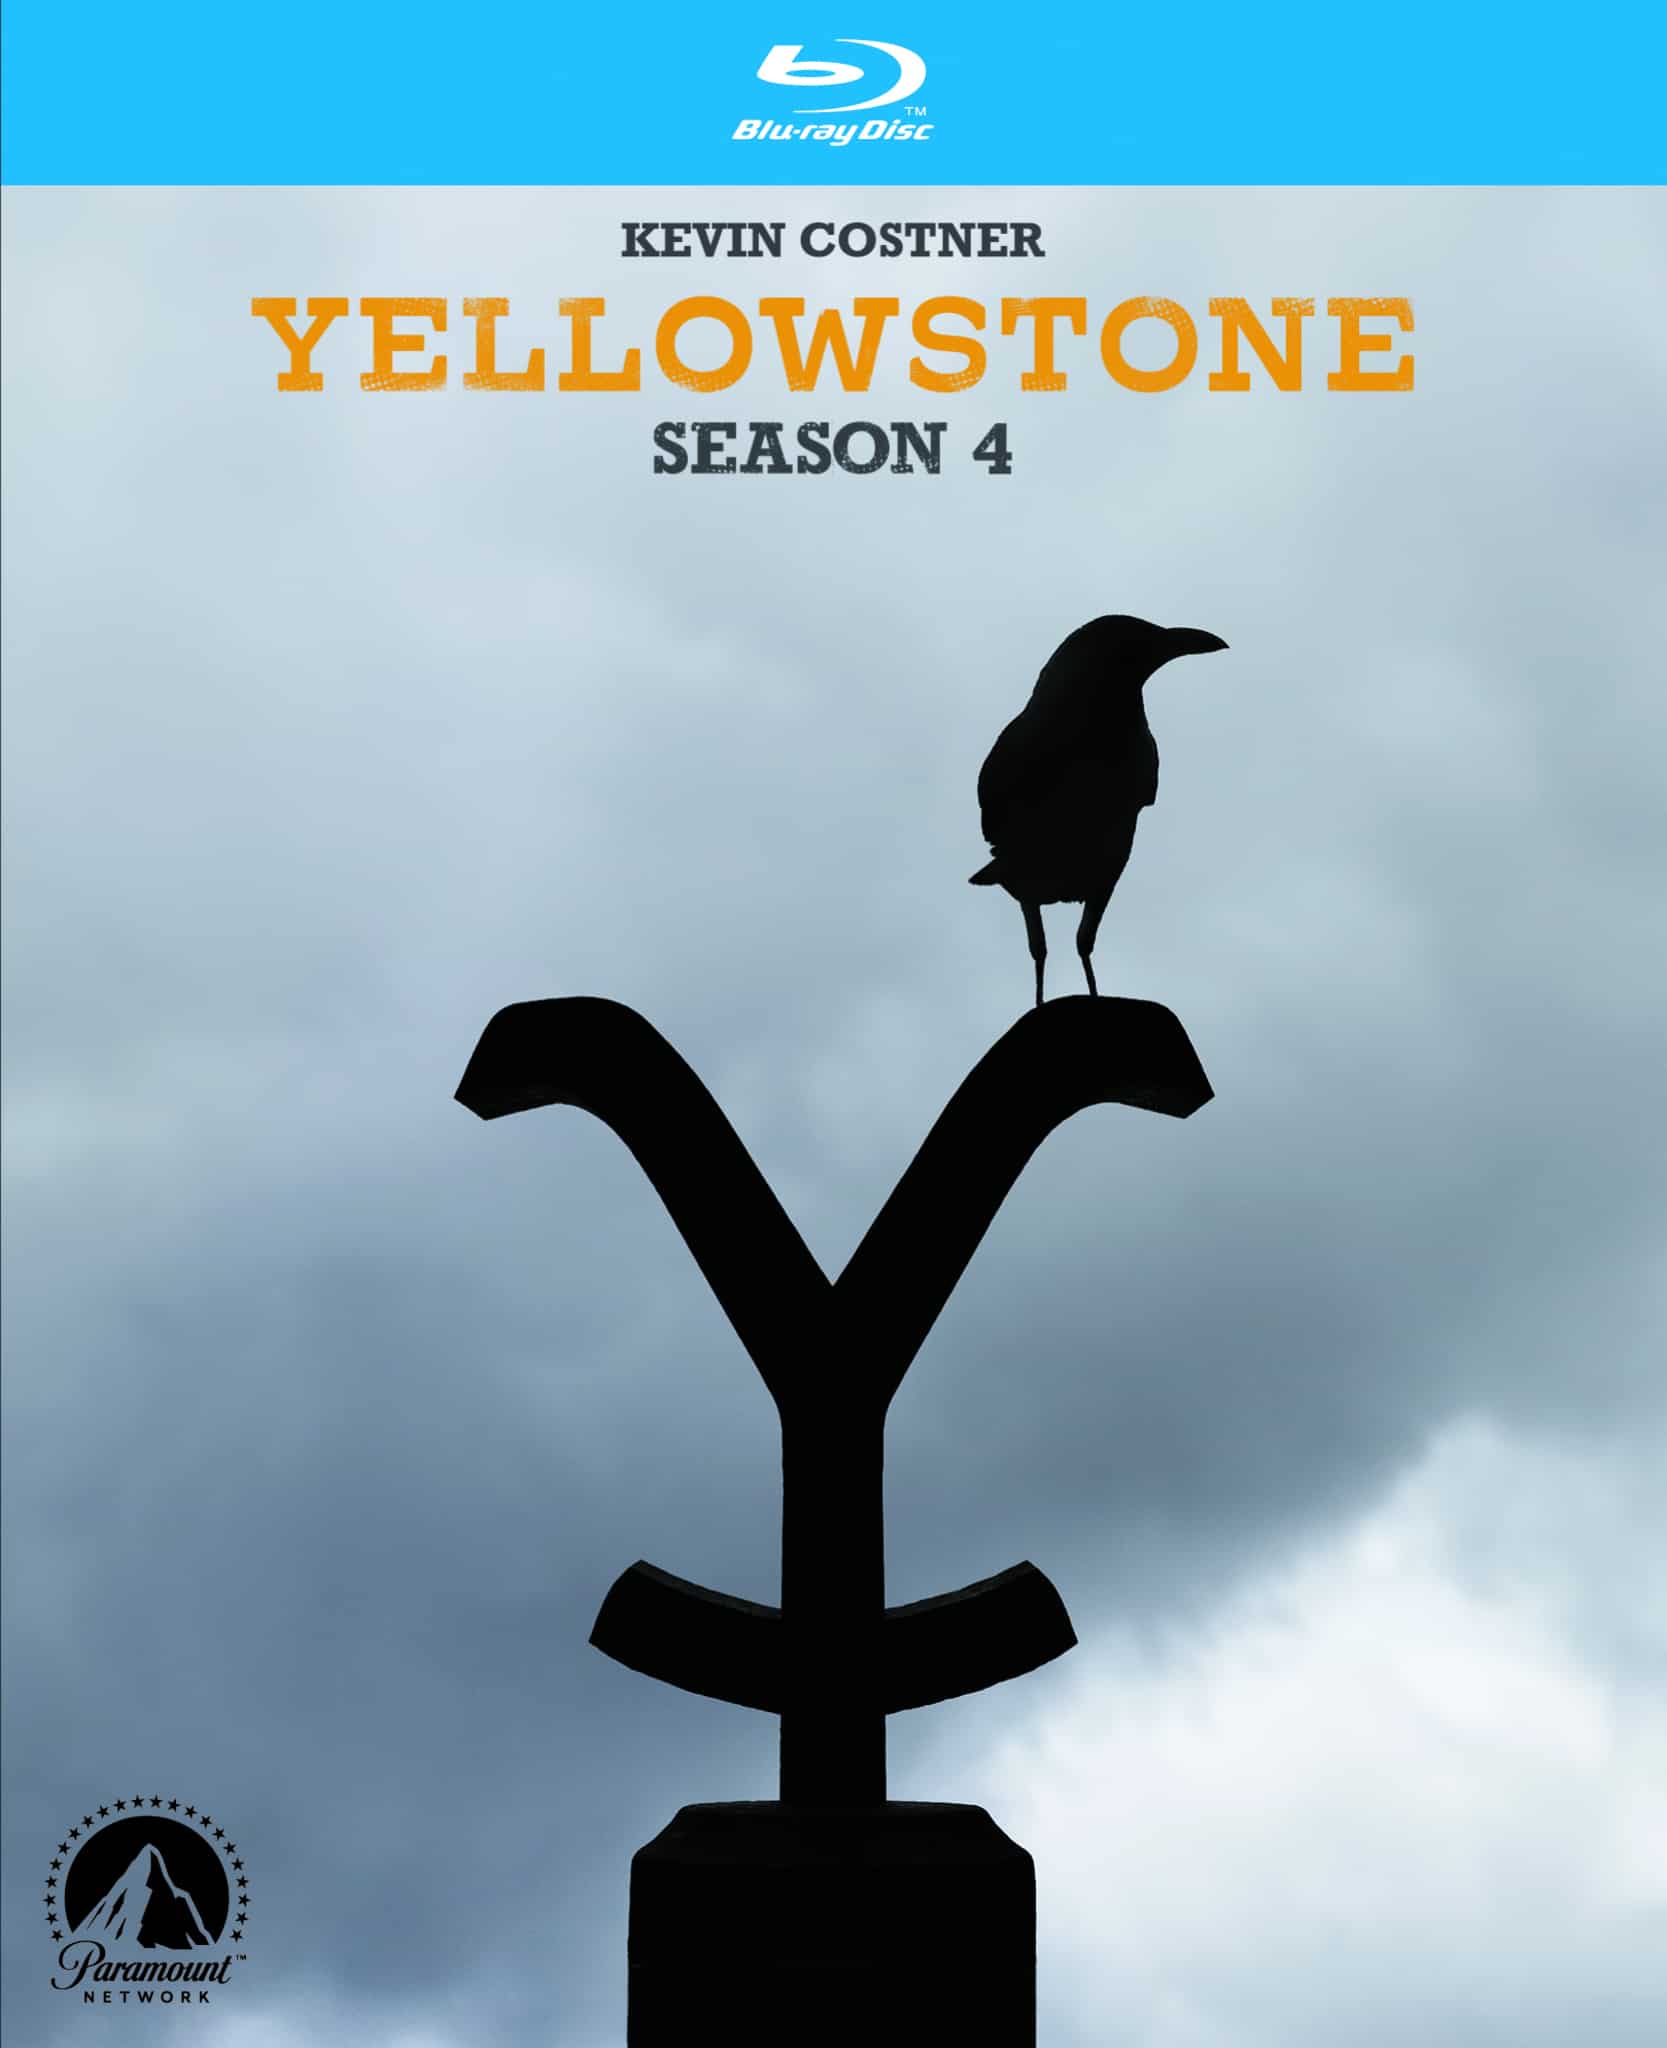 YELLOWSTONE Season 4 arrives on Blu-ray & DVD March 8th 18